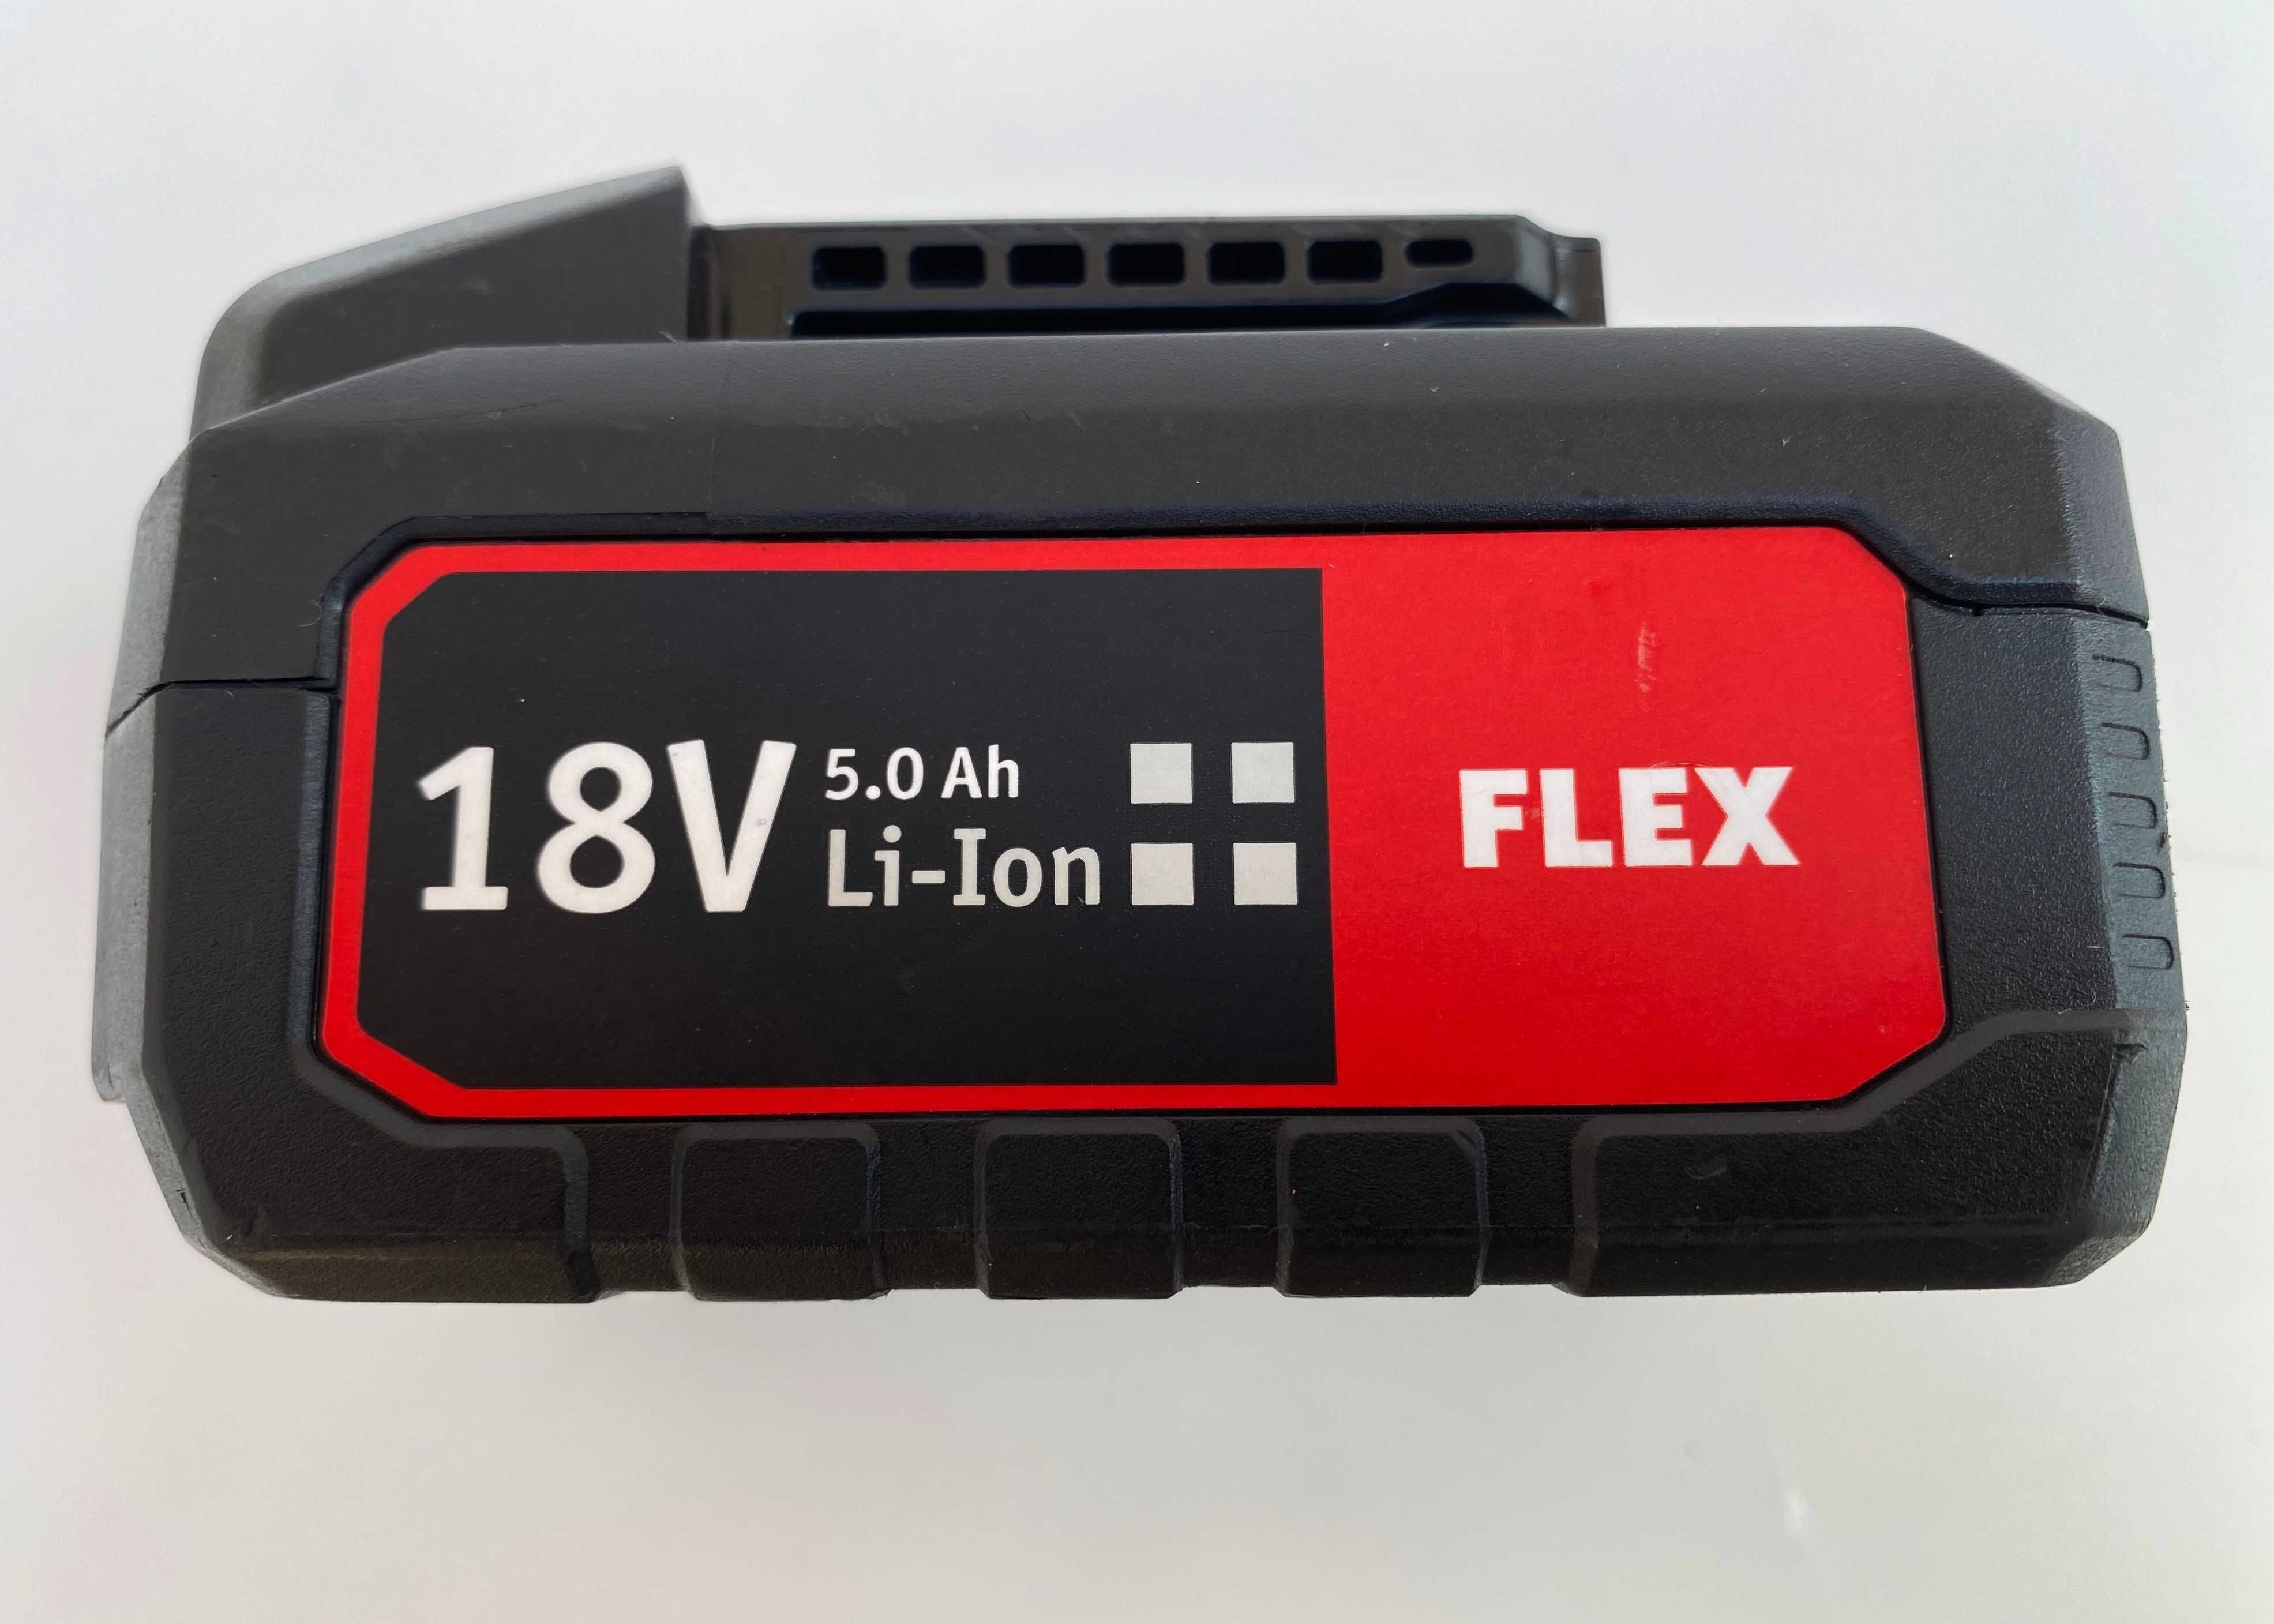 FLEX AP 18.0/5.0 - Акумулаторна батерия 18V 5.0Ah с индикатор!